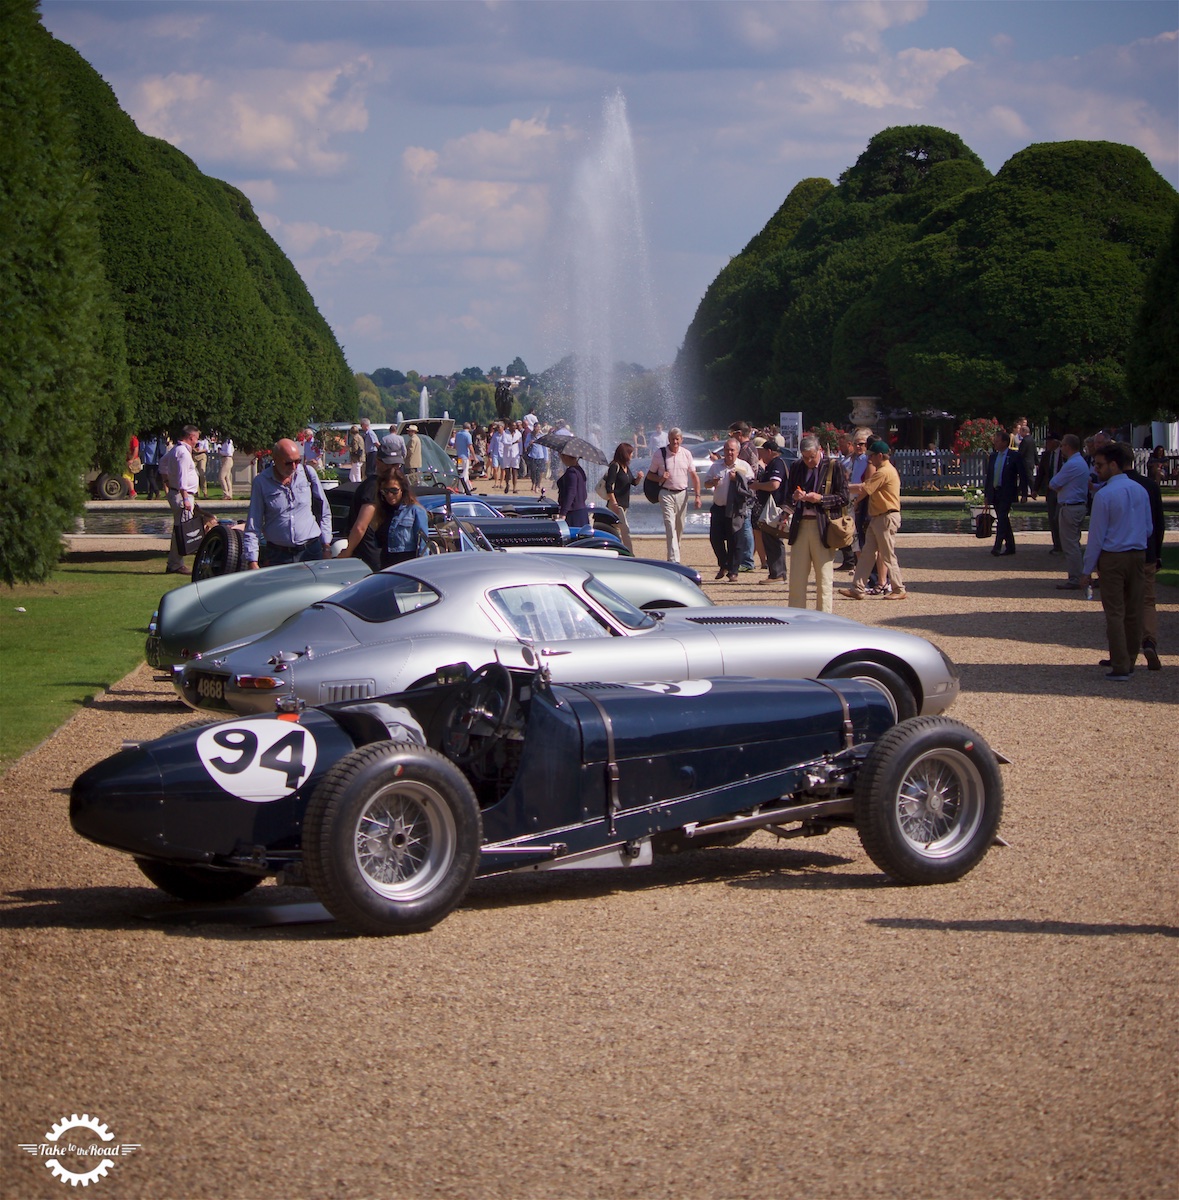 Concours of Elegance to Celebrate Aston Martin and Zagato